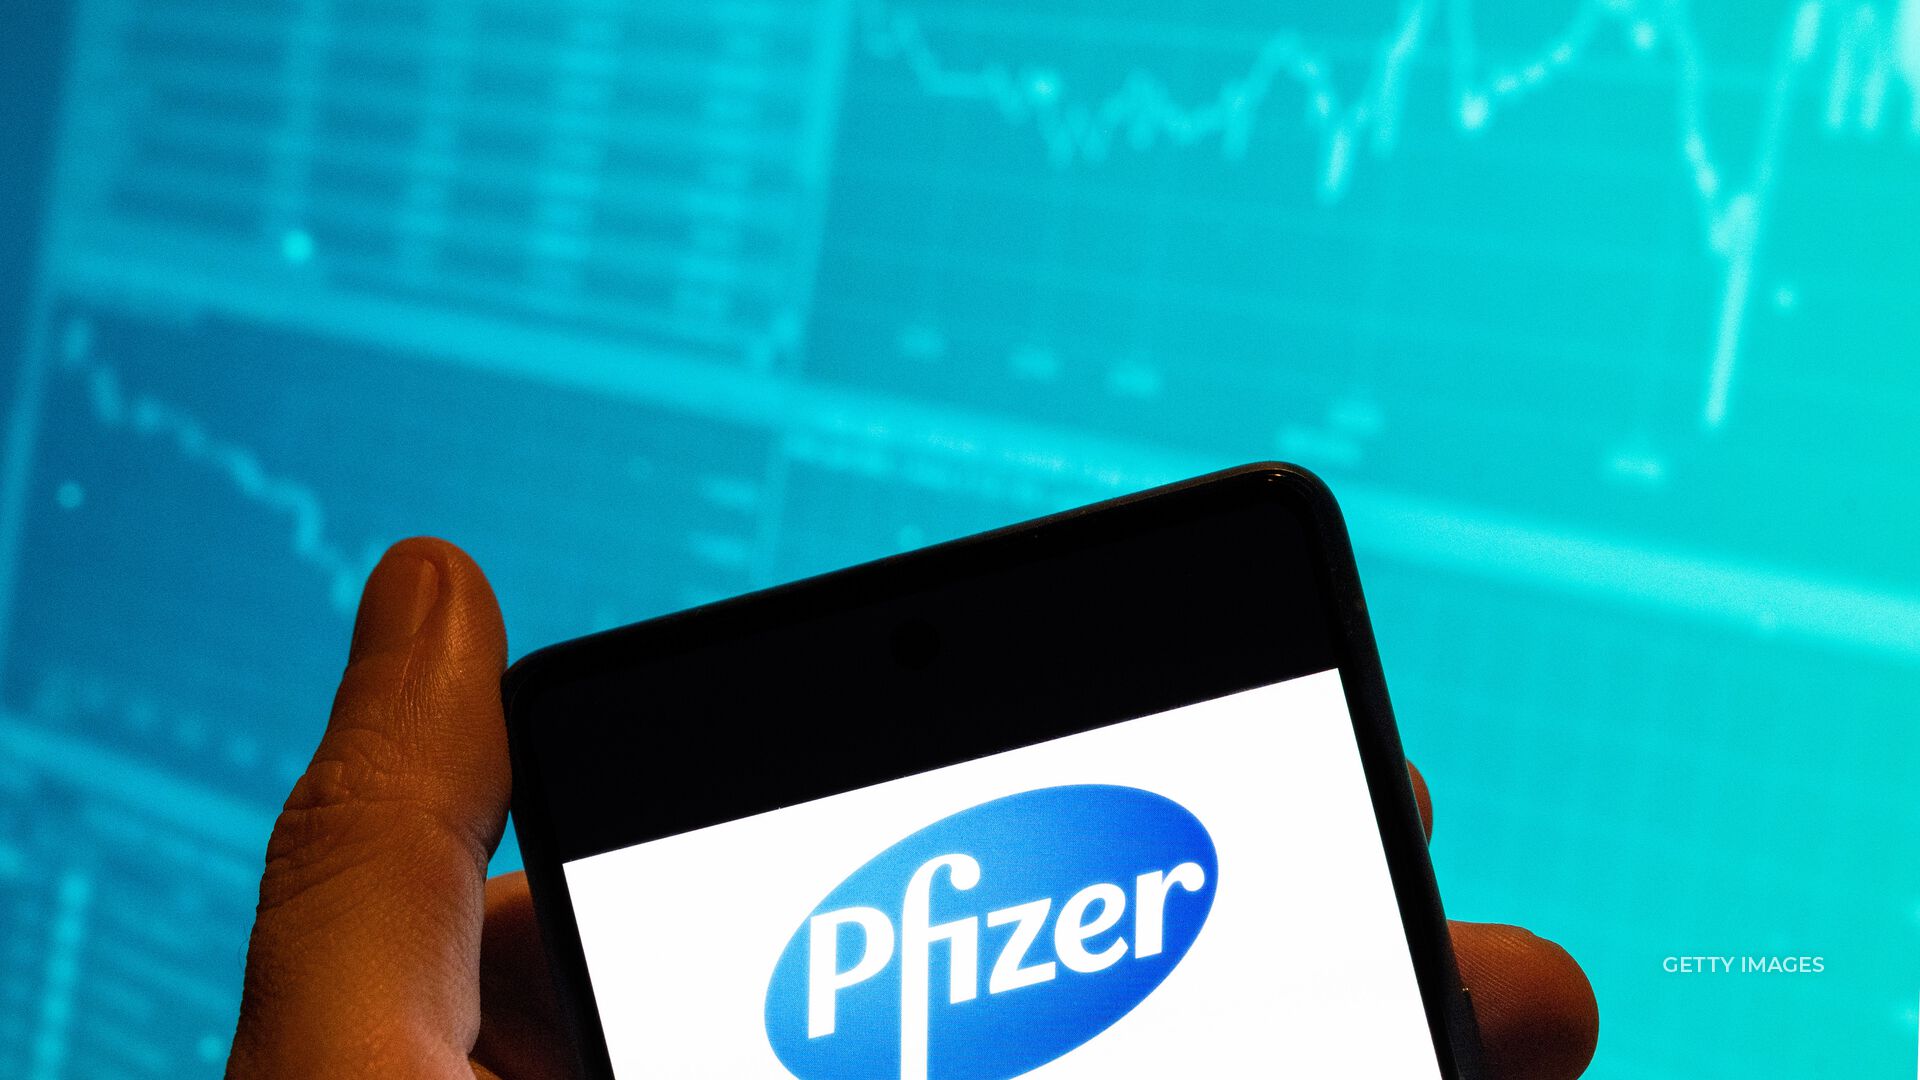 Pharmaceutical giant Pfizer to buy biotech firm Seagen